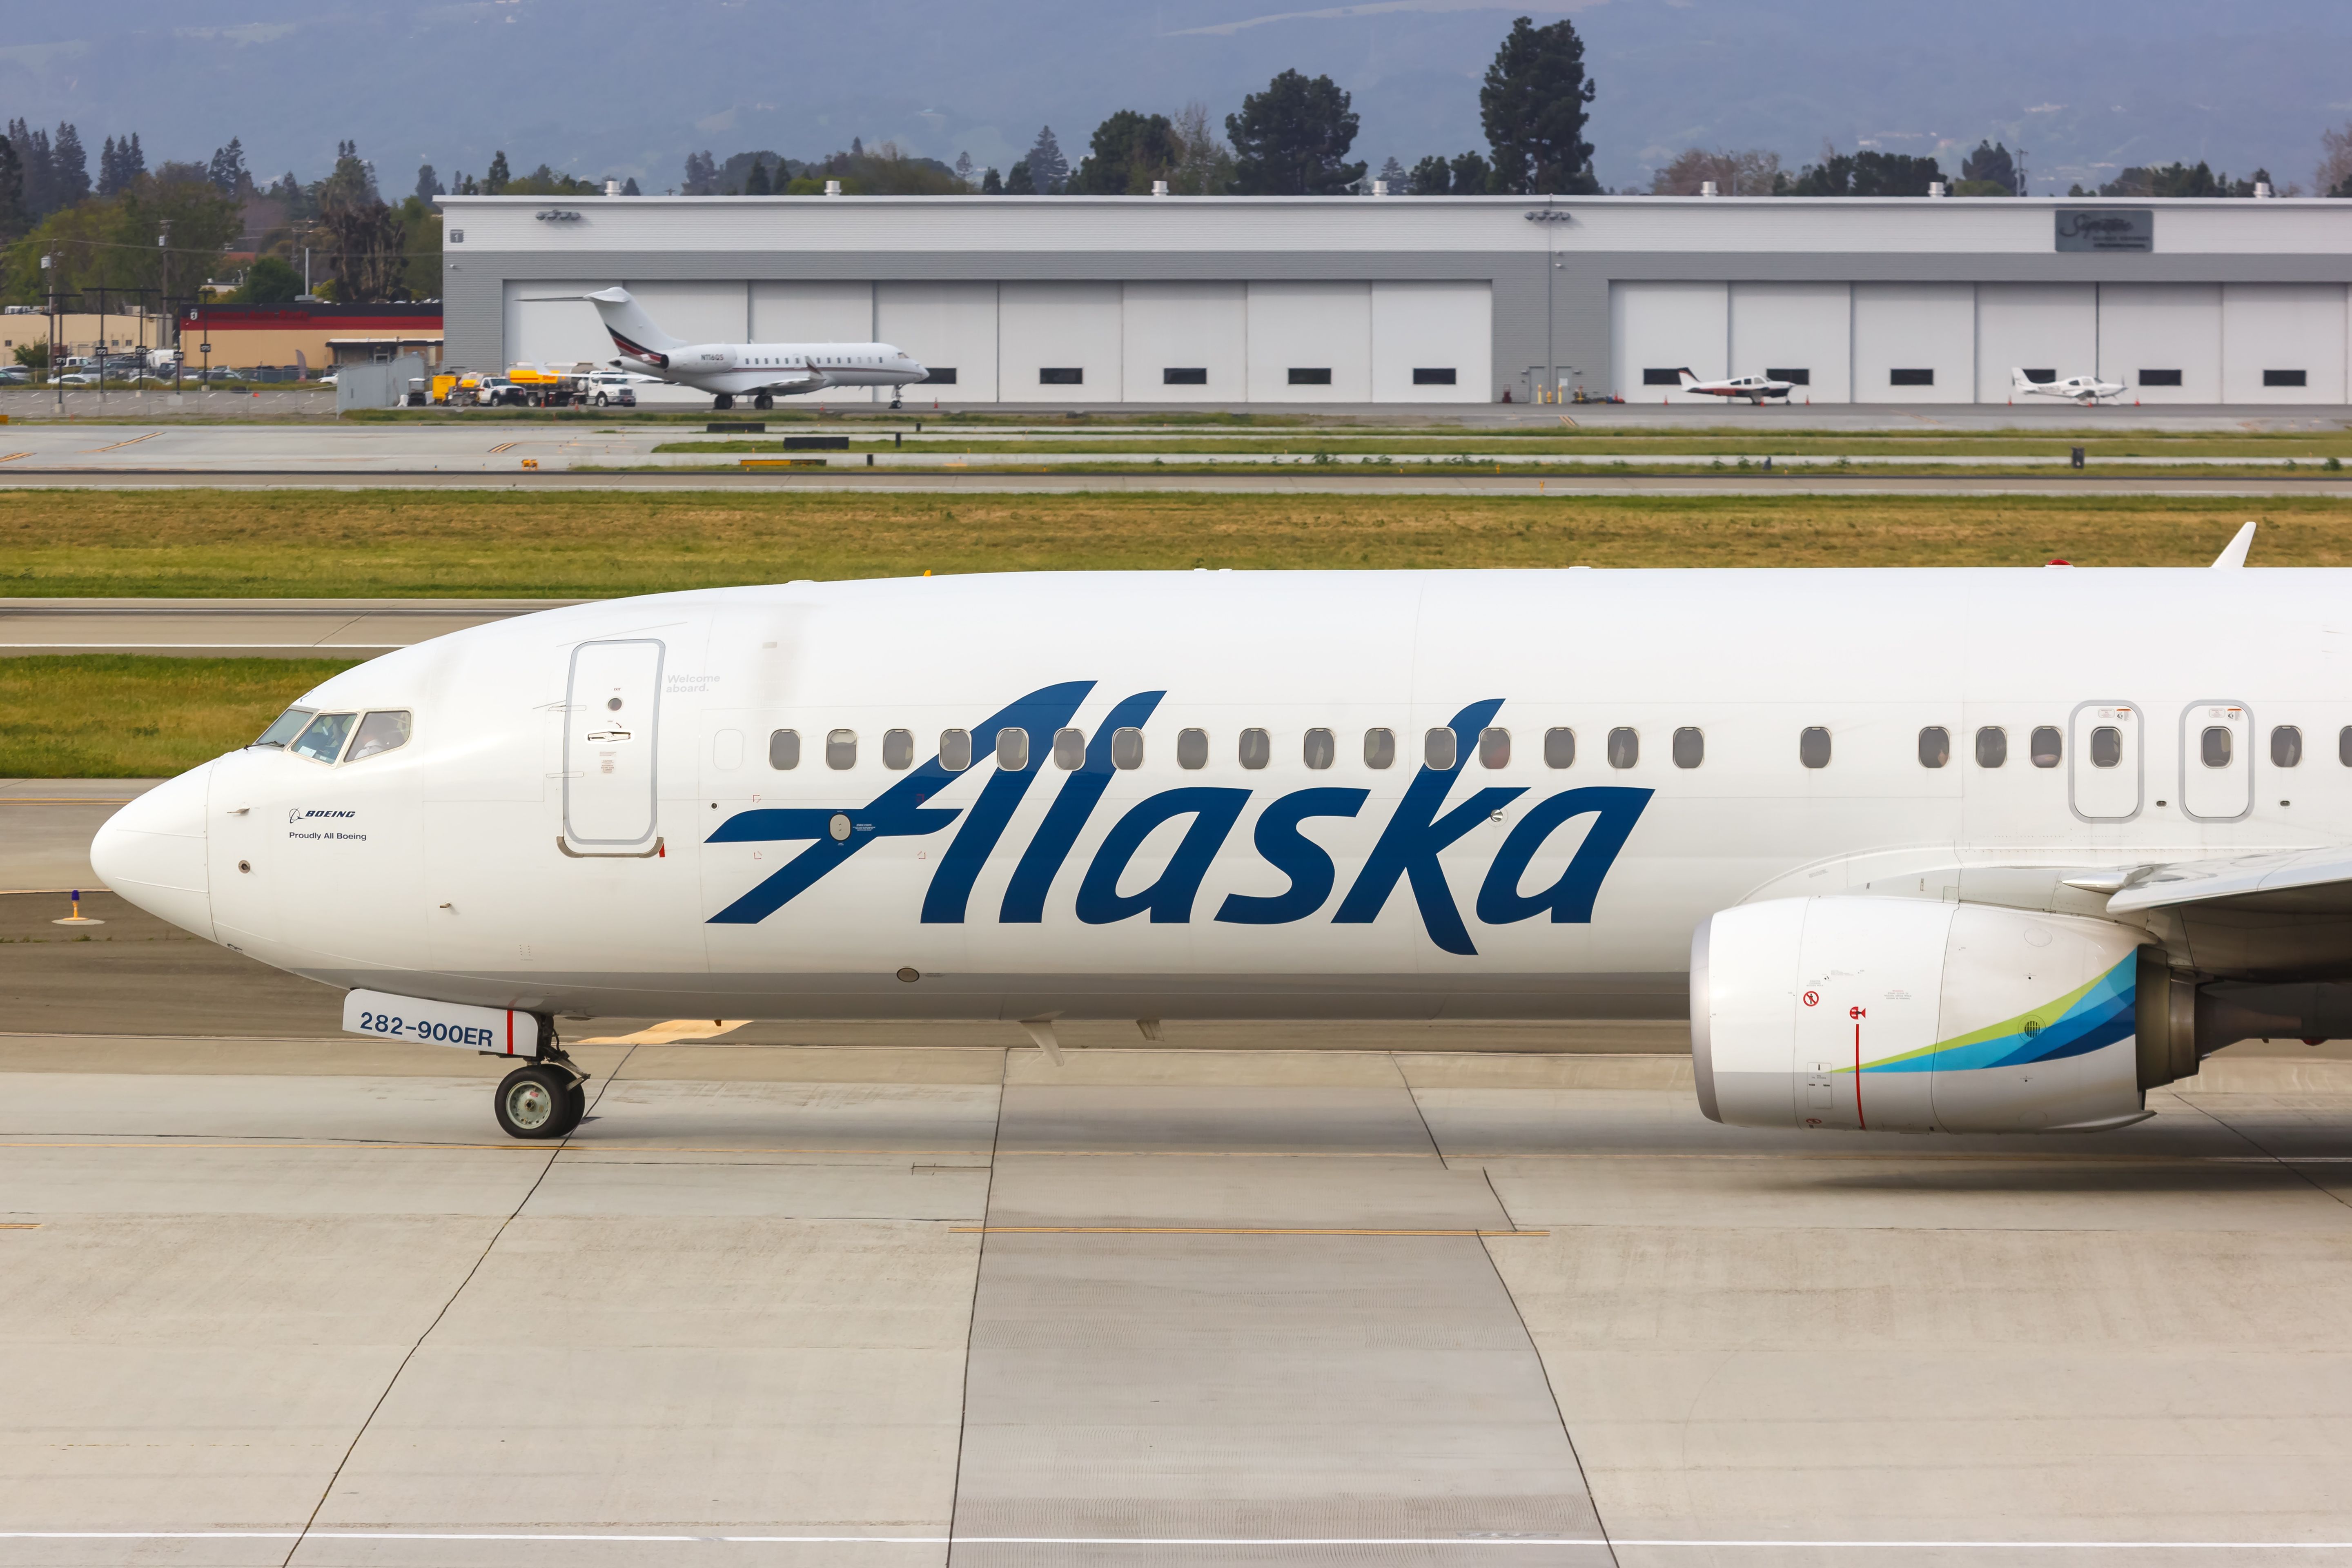 An Alaska Airlines aircraft on an airport apron.